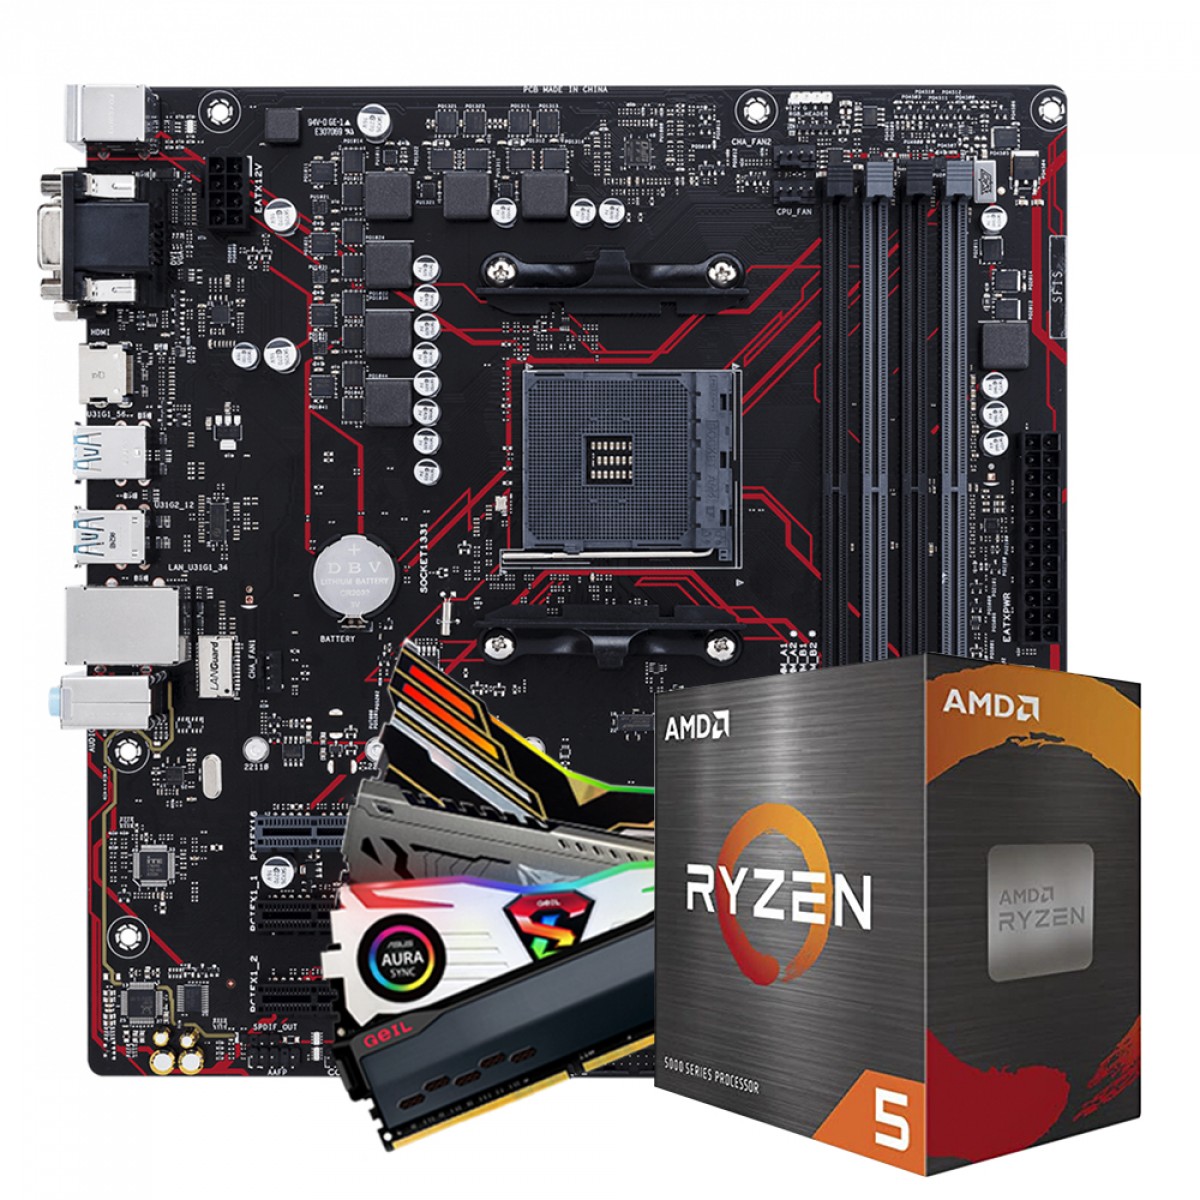 Kit Upgrade, AMD Ryzen 5 3600 + Placa Mãe B450 + Memória DDR4 8GB